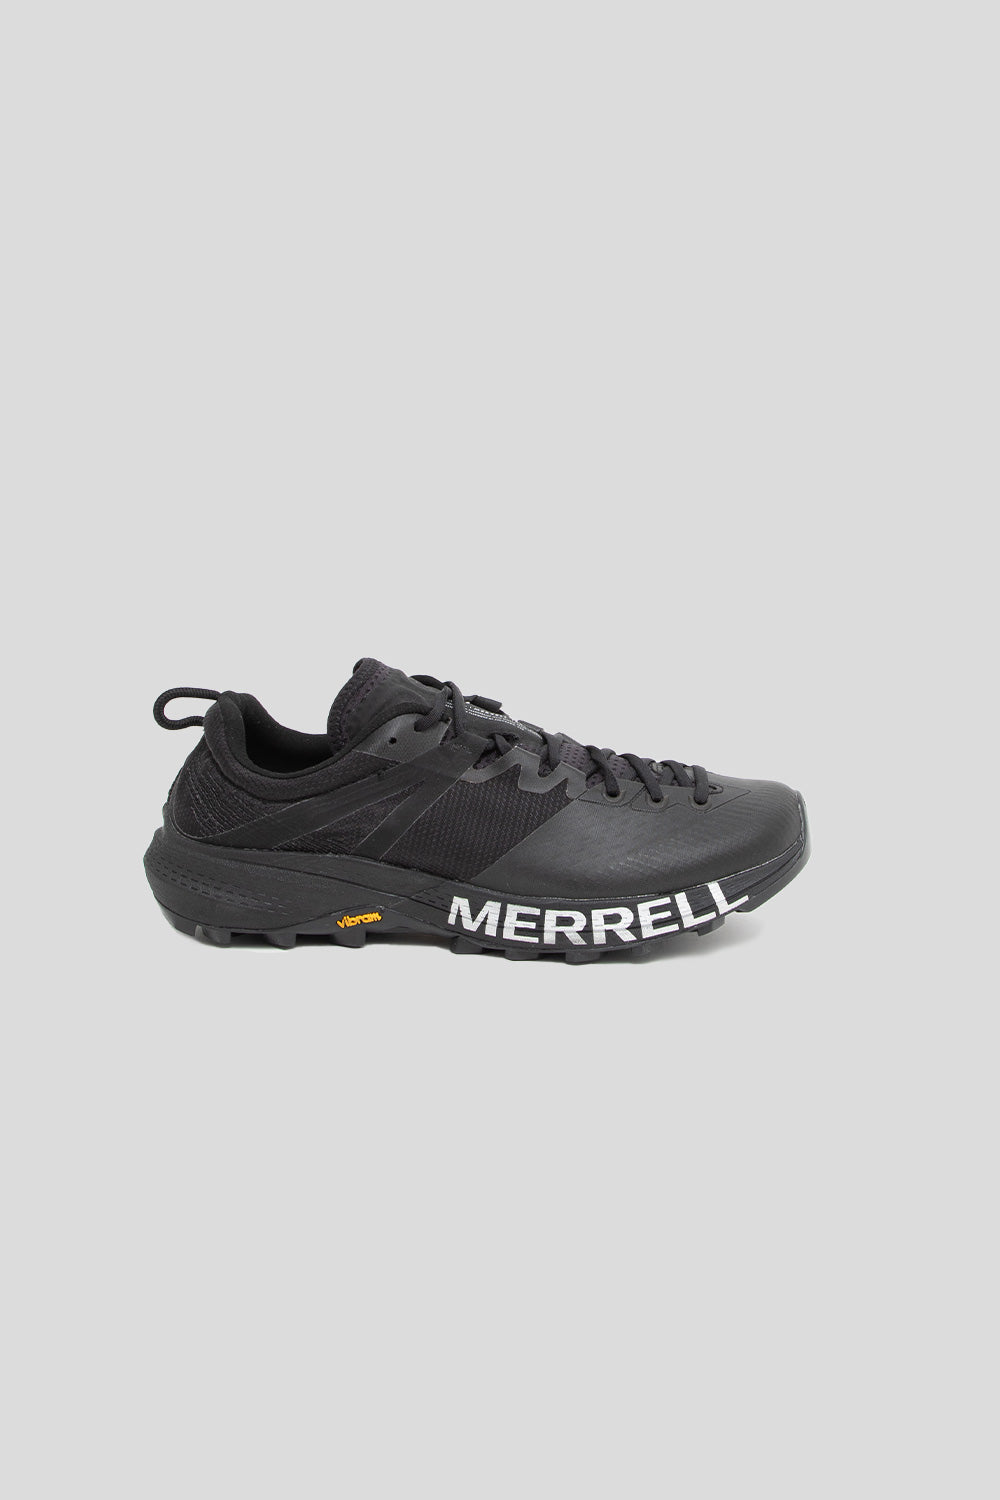 Merrell 1TRL Moab Speed GTX SE in Black | Shop